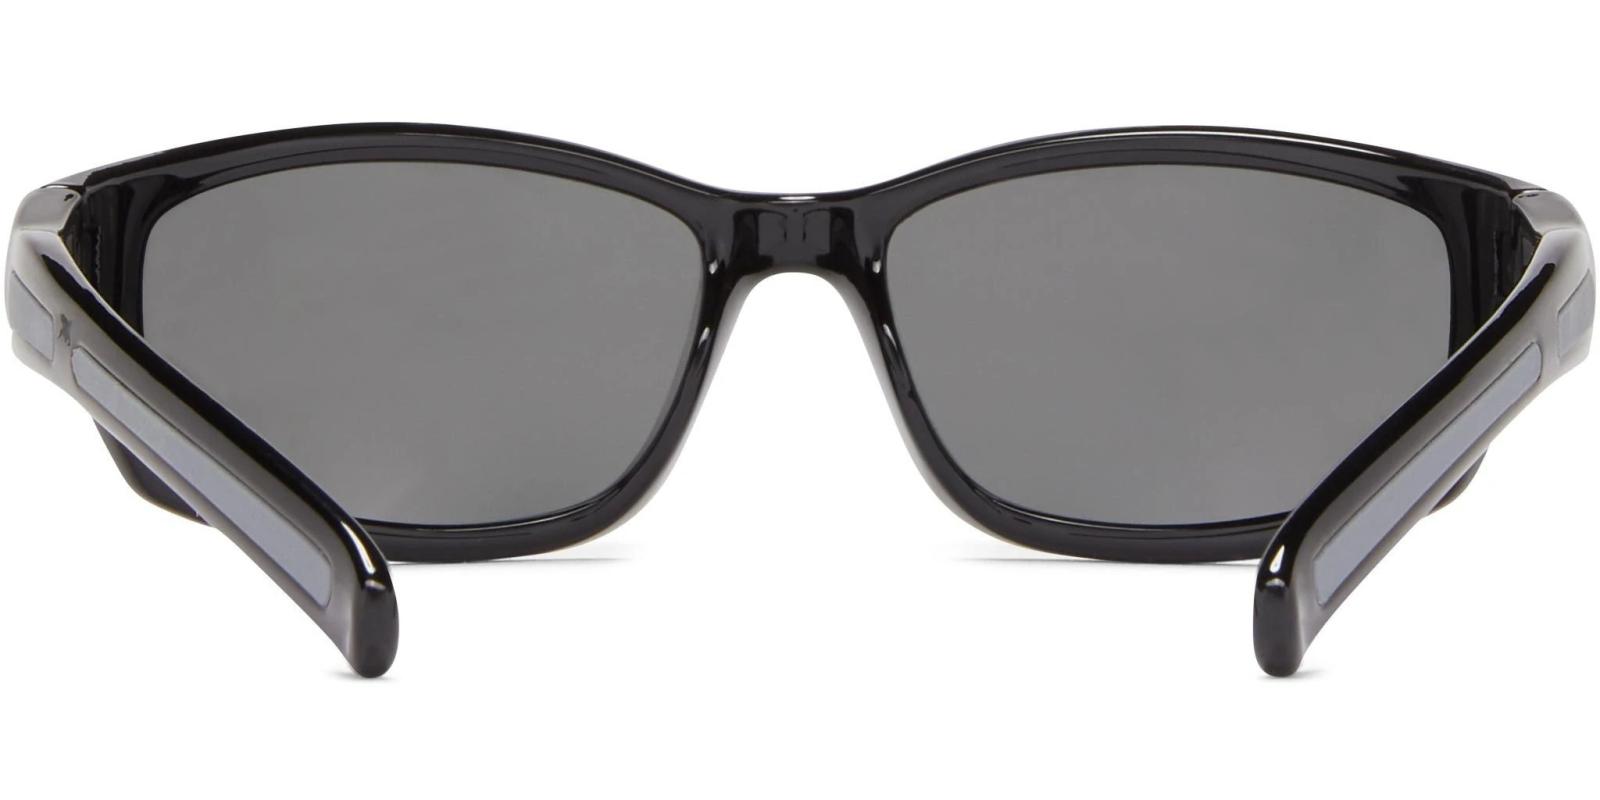 icu Eyewear Kid's Polarized Sunglasses